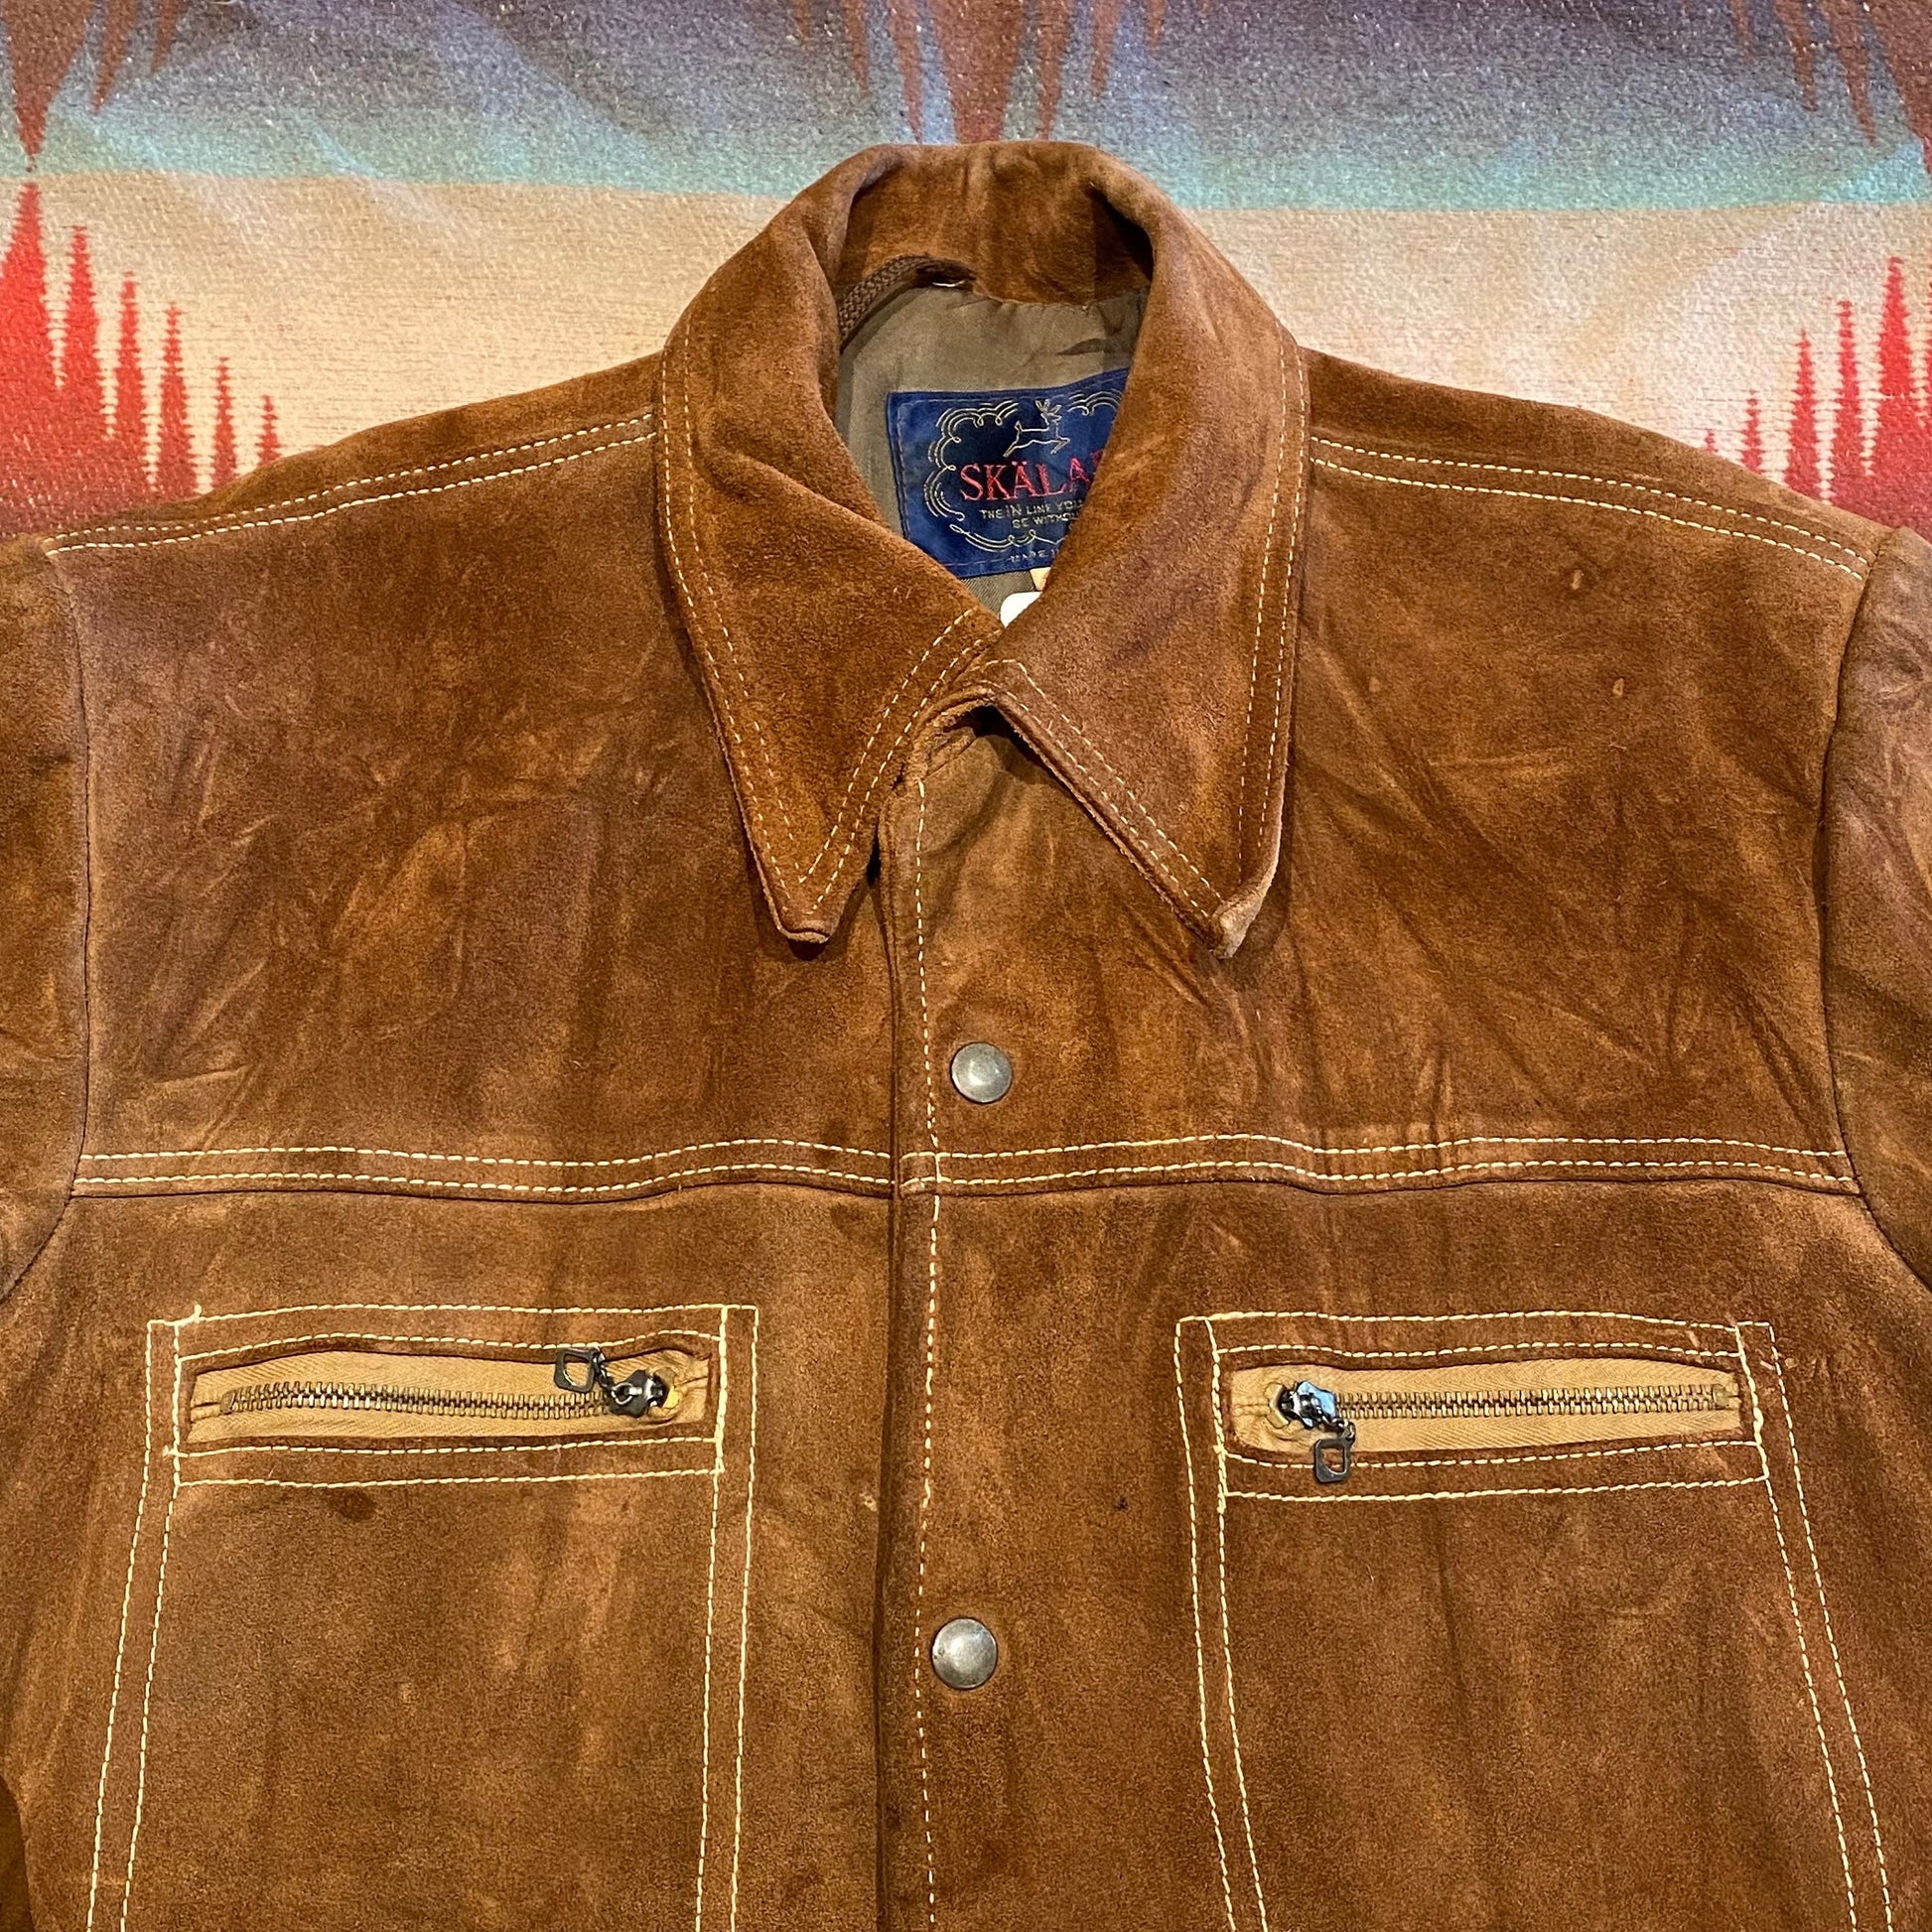 1970s Skalar Brown Leather Suede 4 Pocket Jacket Made in USA Size M/L